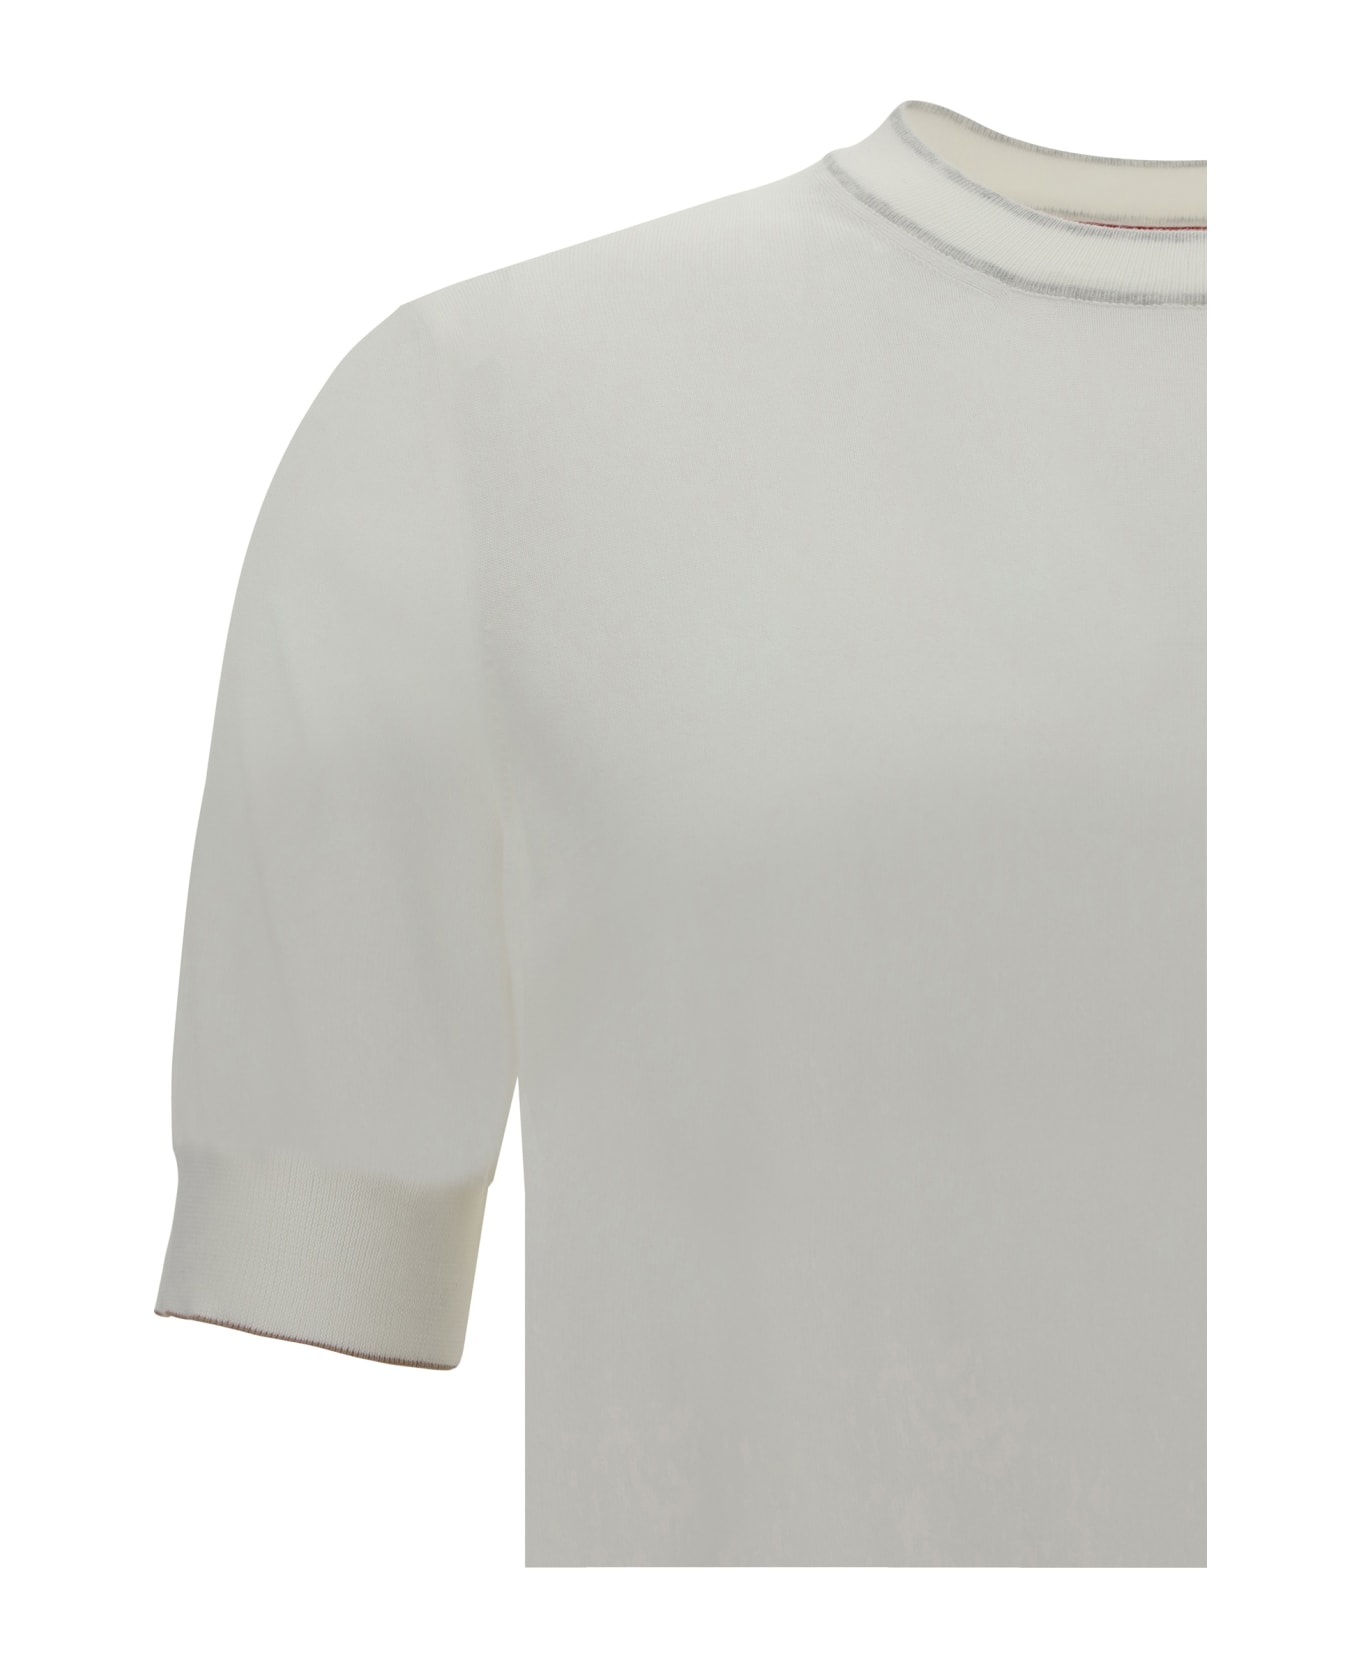 Brunello Cucinelli Cotton Knit T-shirt - Panama+nebbia+creta